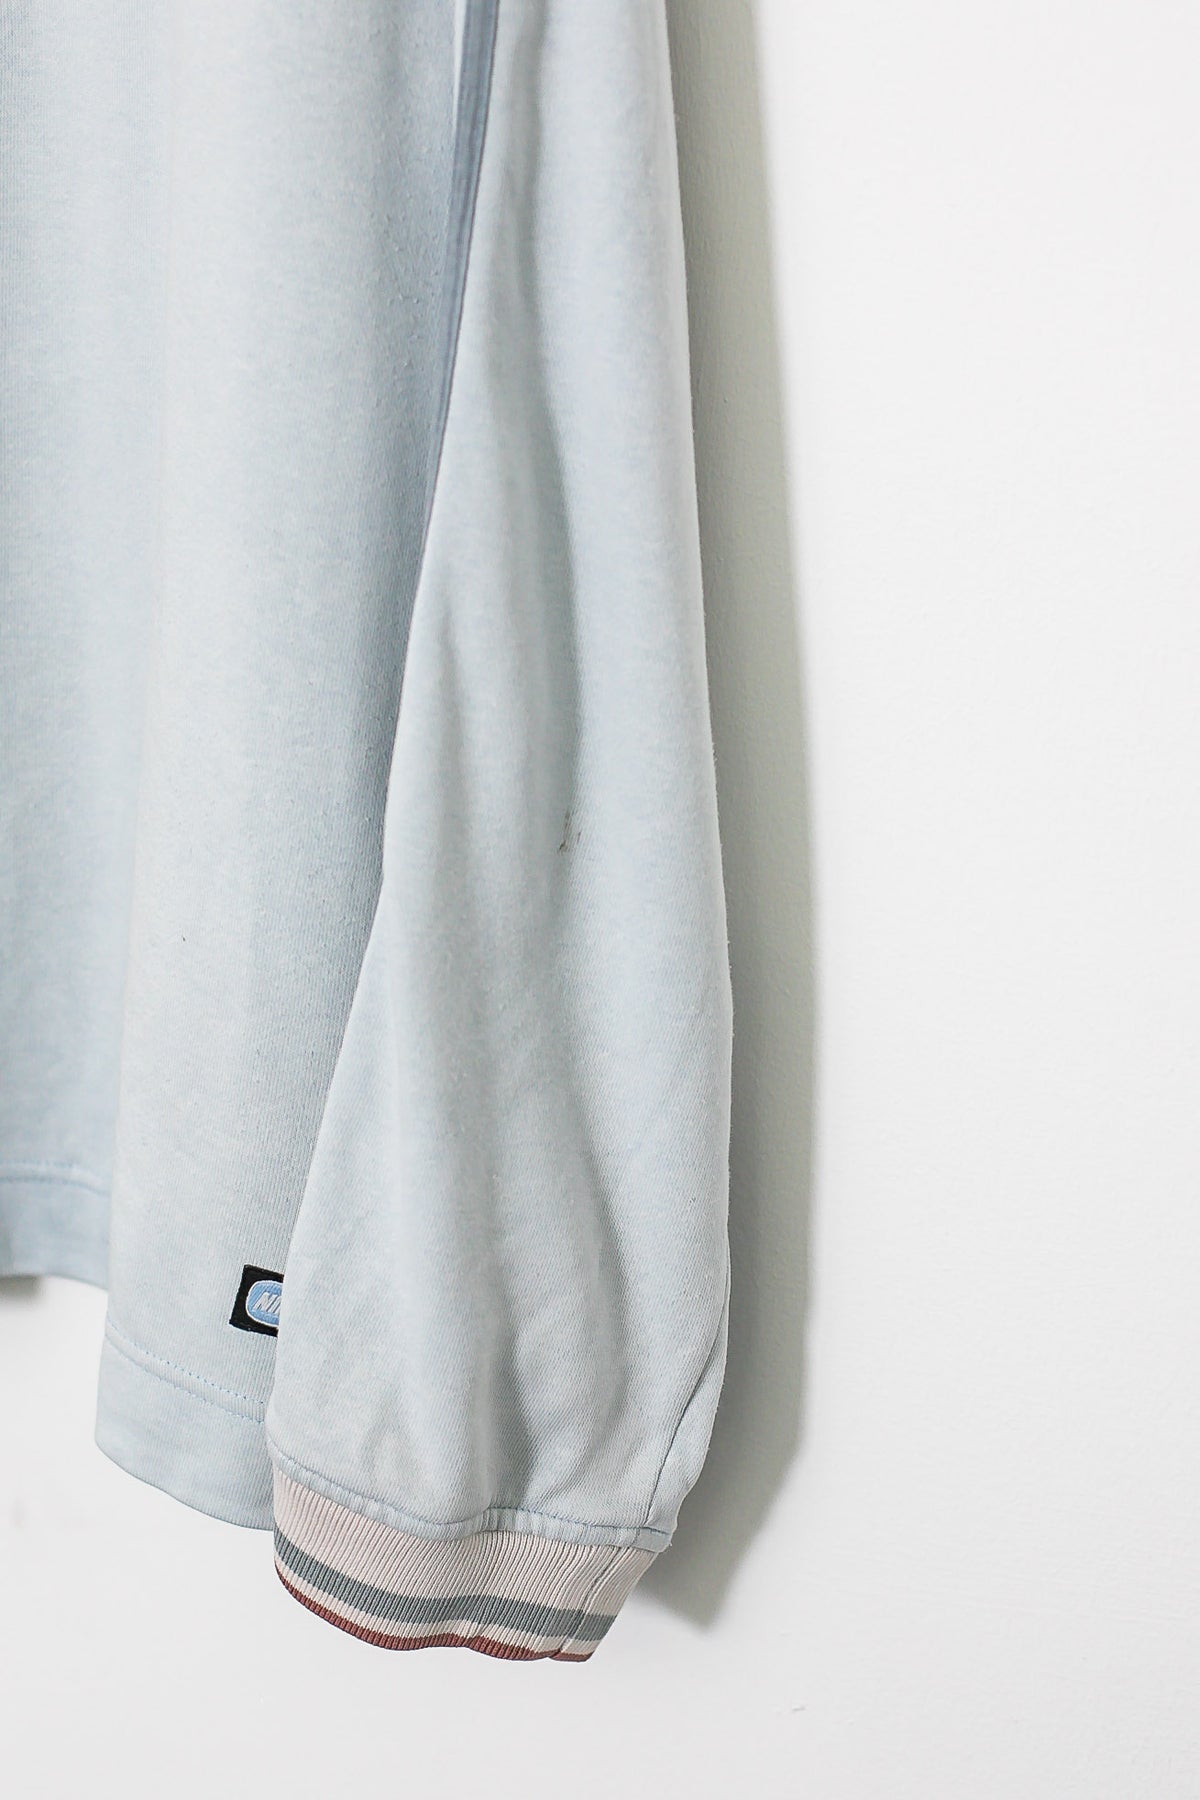 00s Nike 1/4 Zip Sweatshirt (XL)